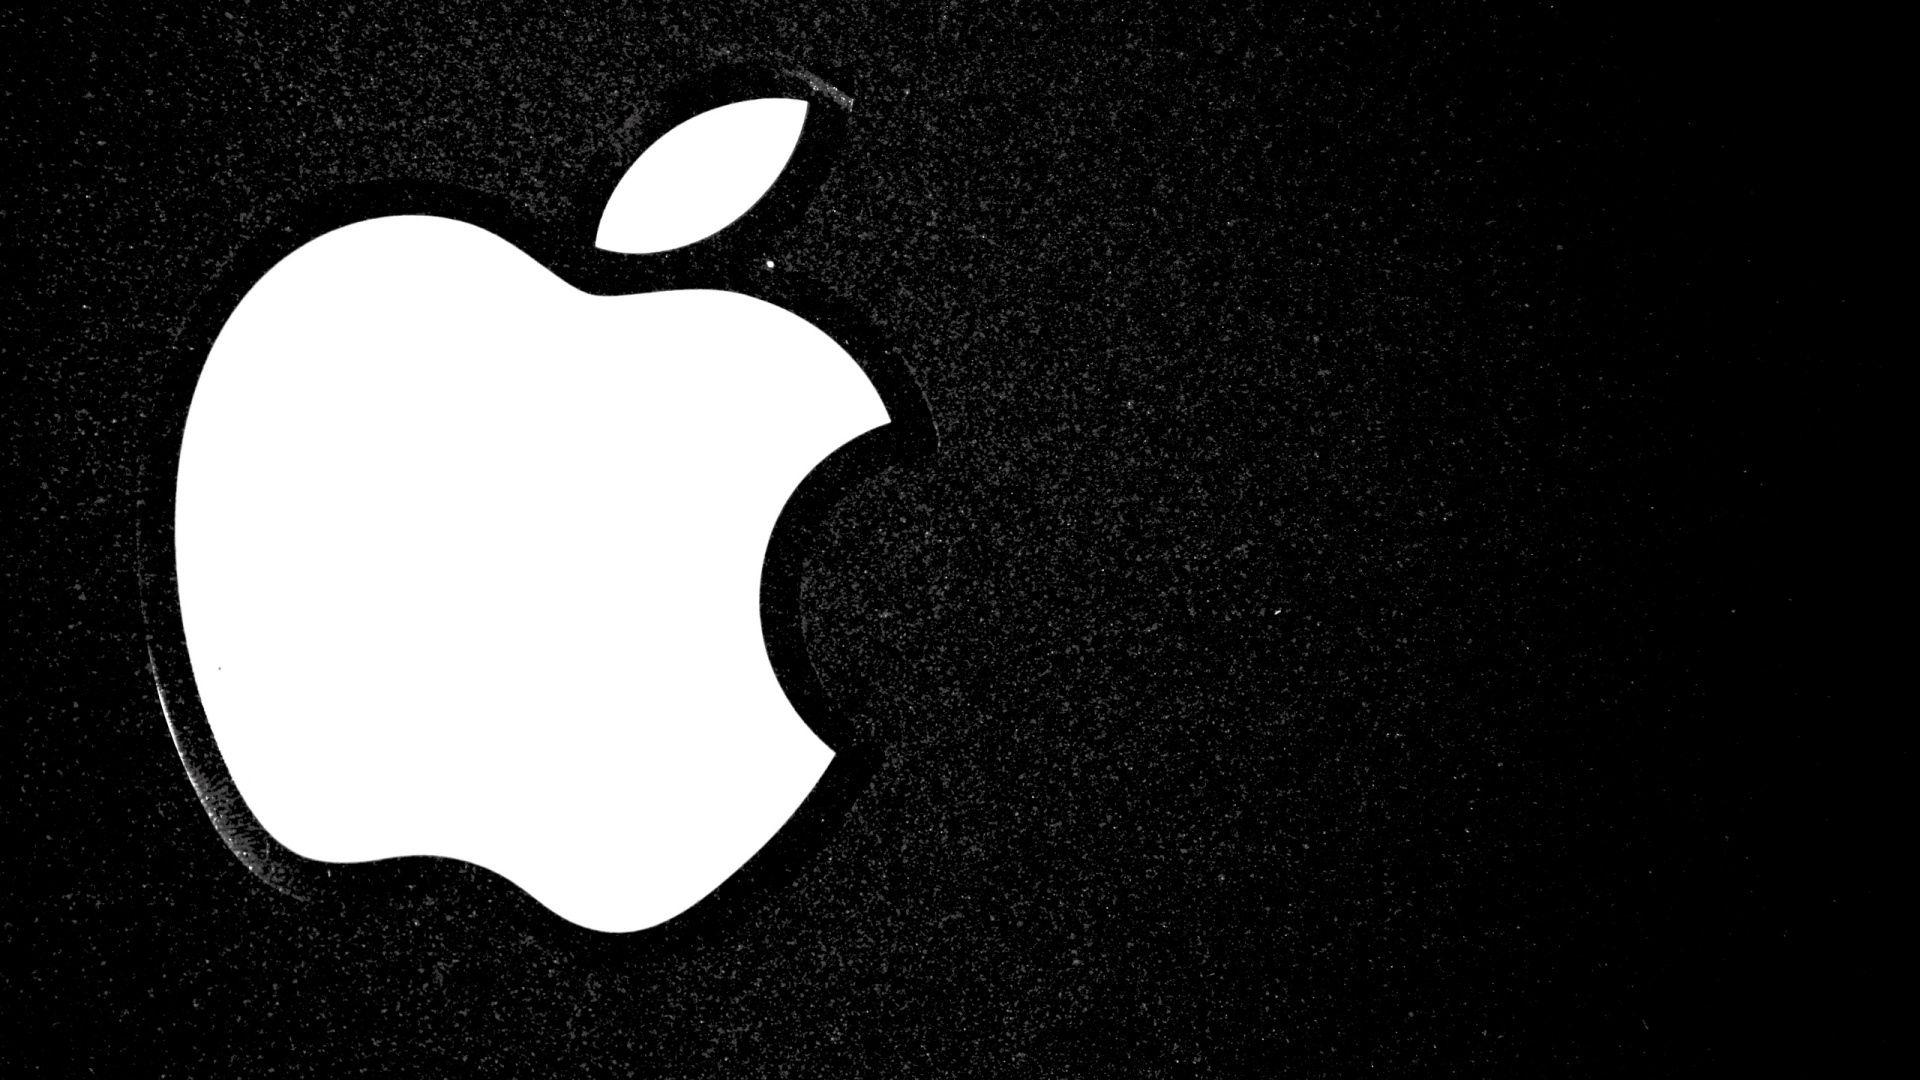 Download wallpaper 1920x1080 apple, mac, surface, black white, logo